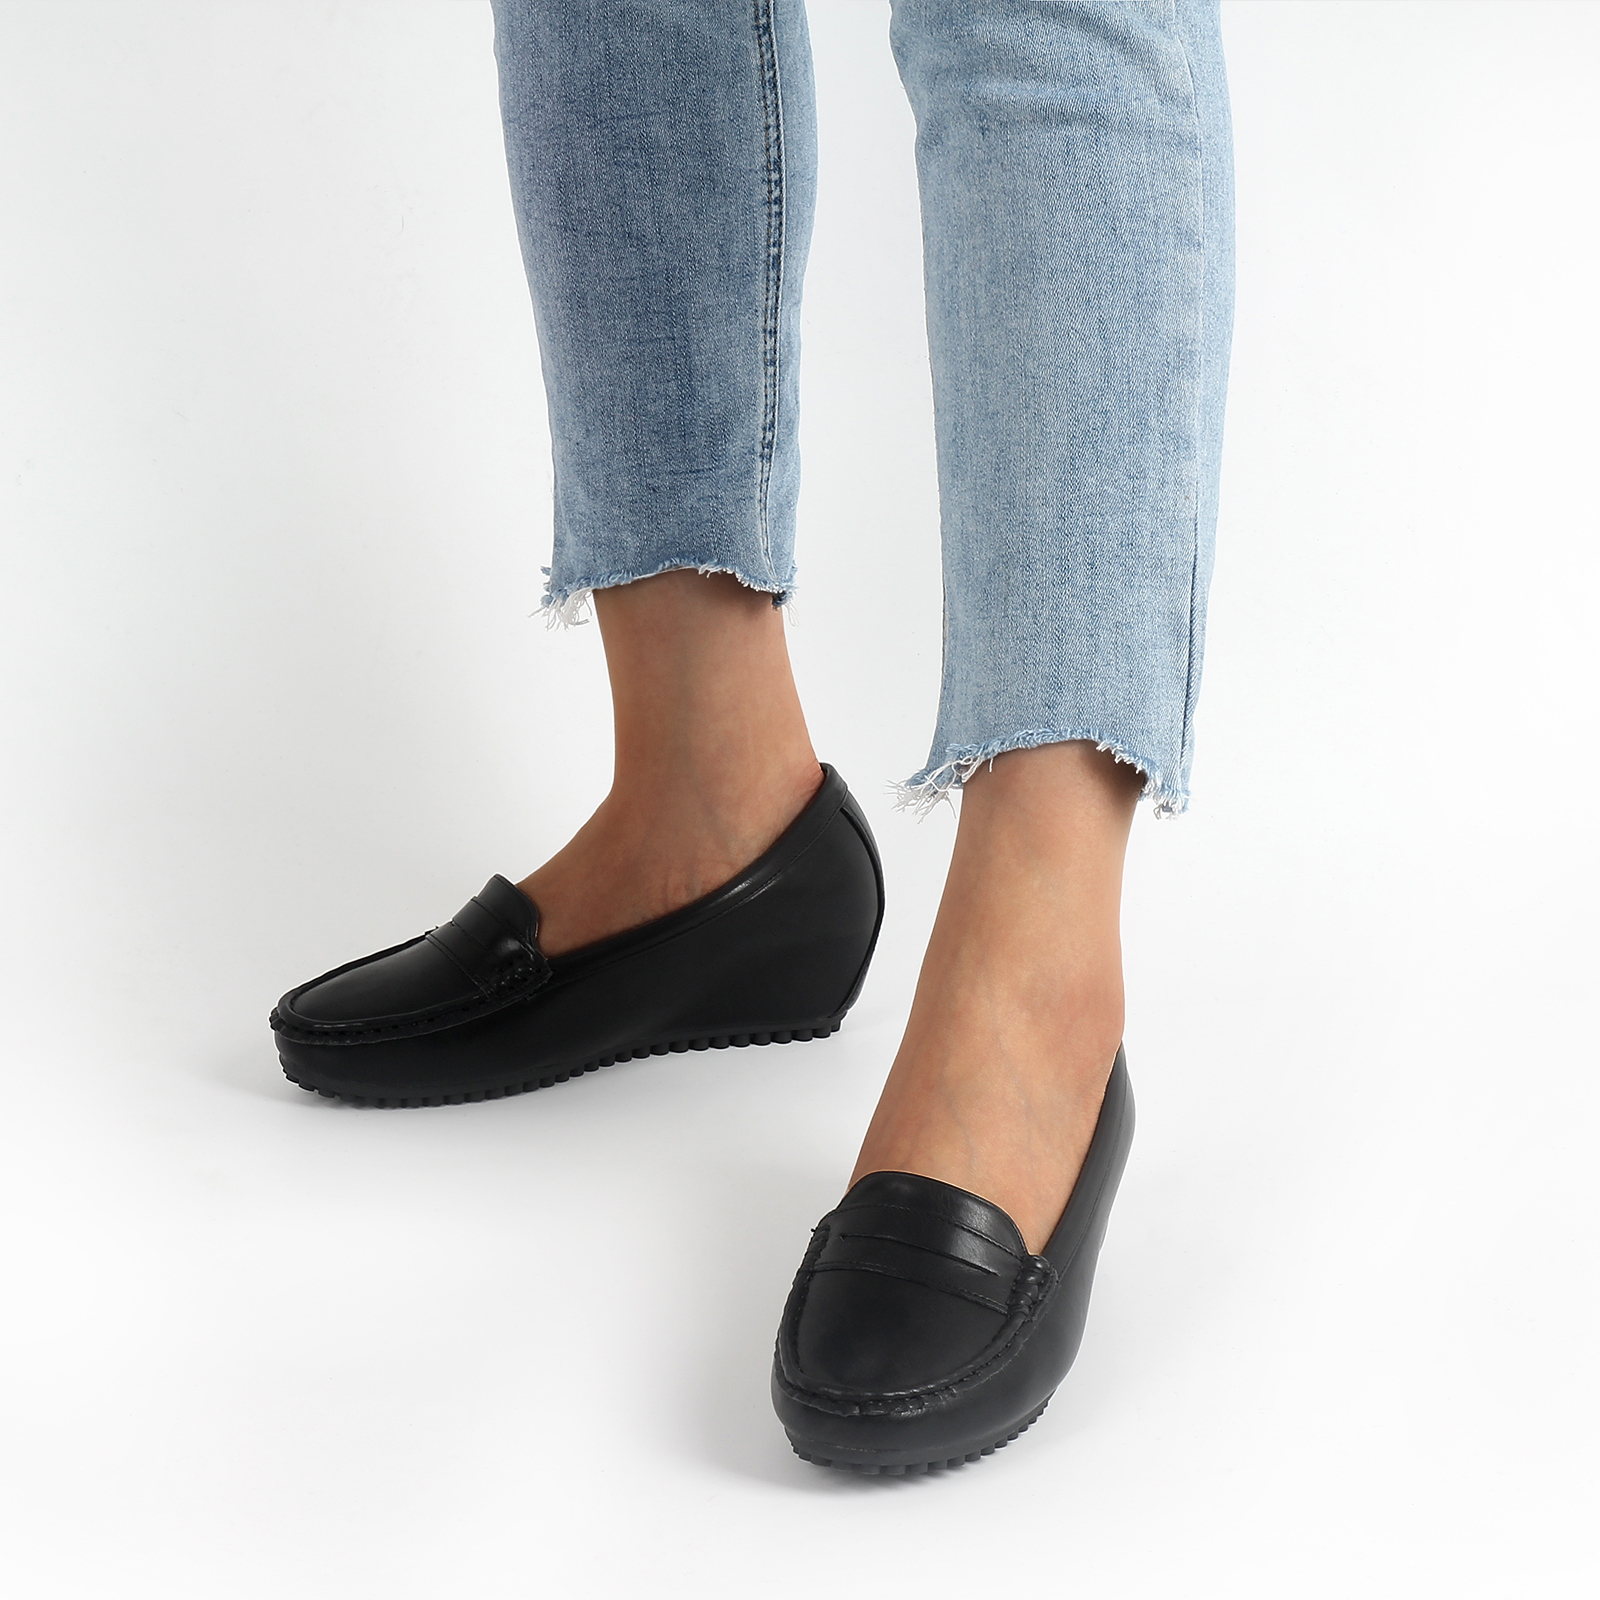 MUSSHOE Women’s Slope Heel Loafers